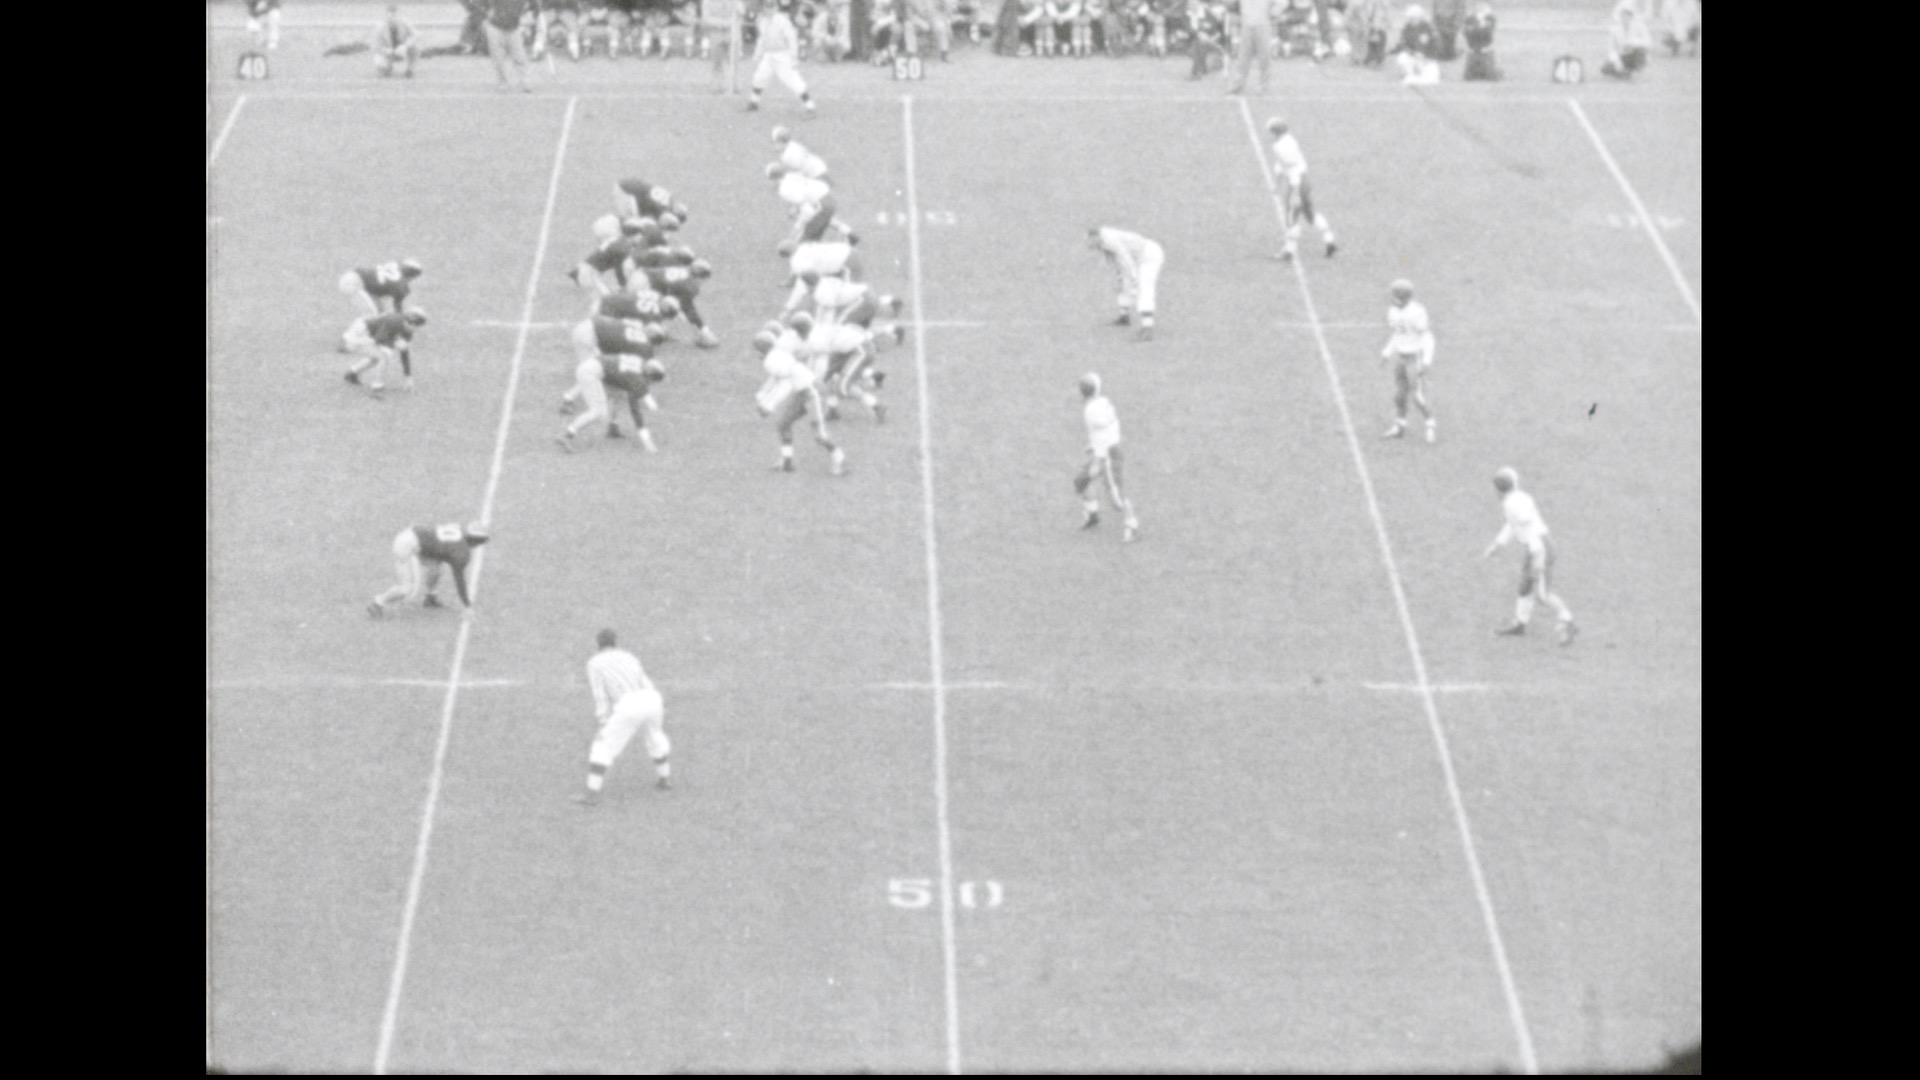 MSC Football vs. Purdue, 1953